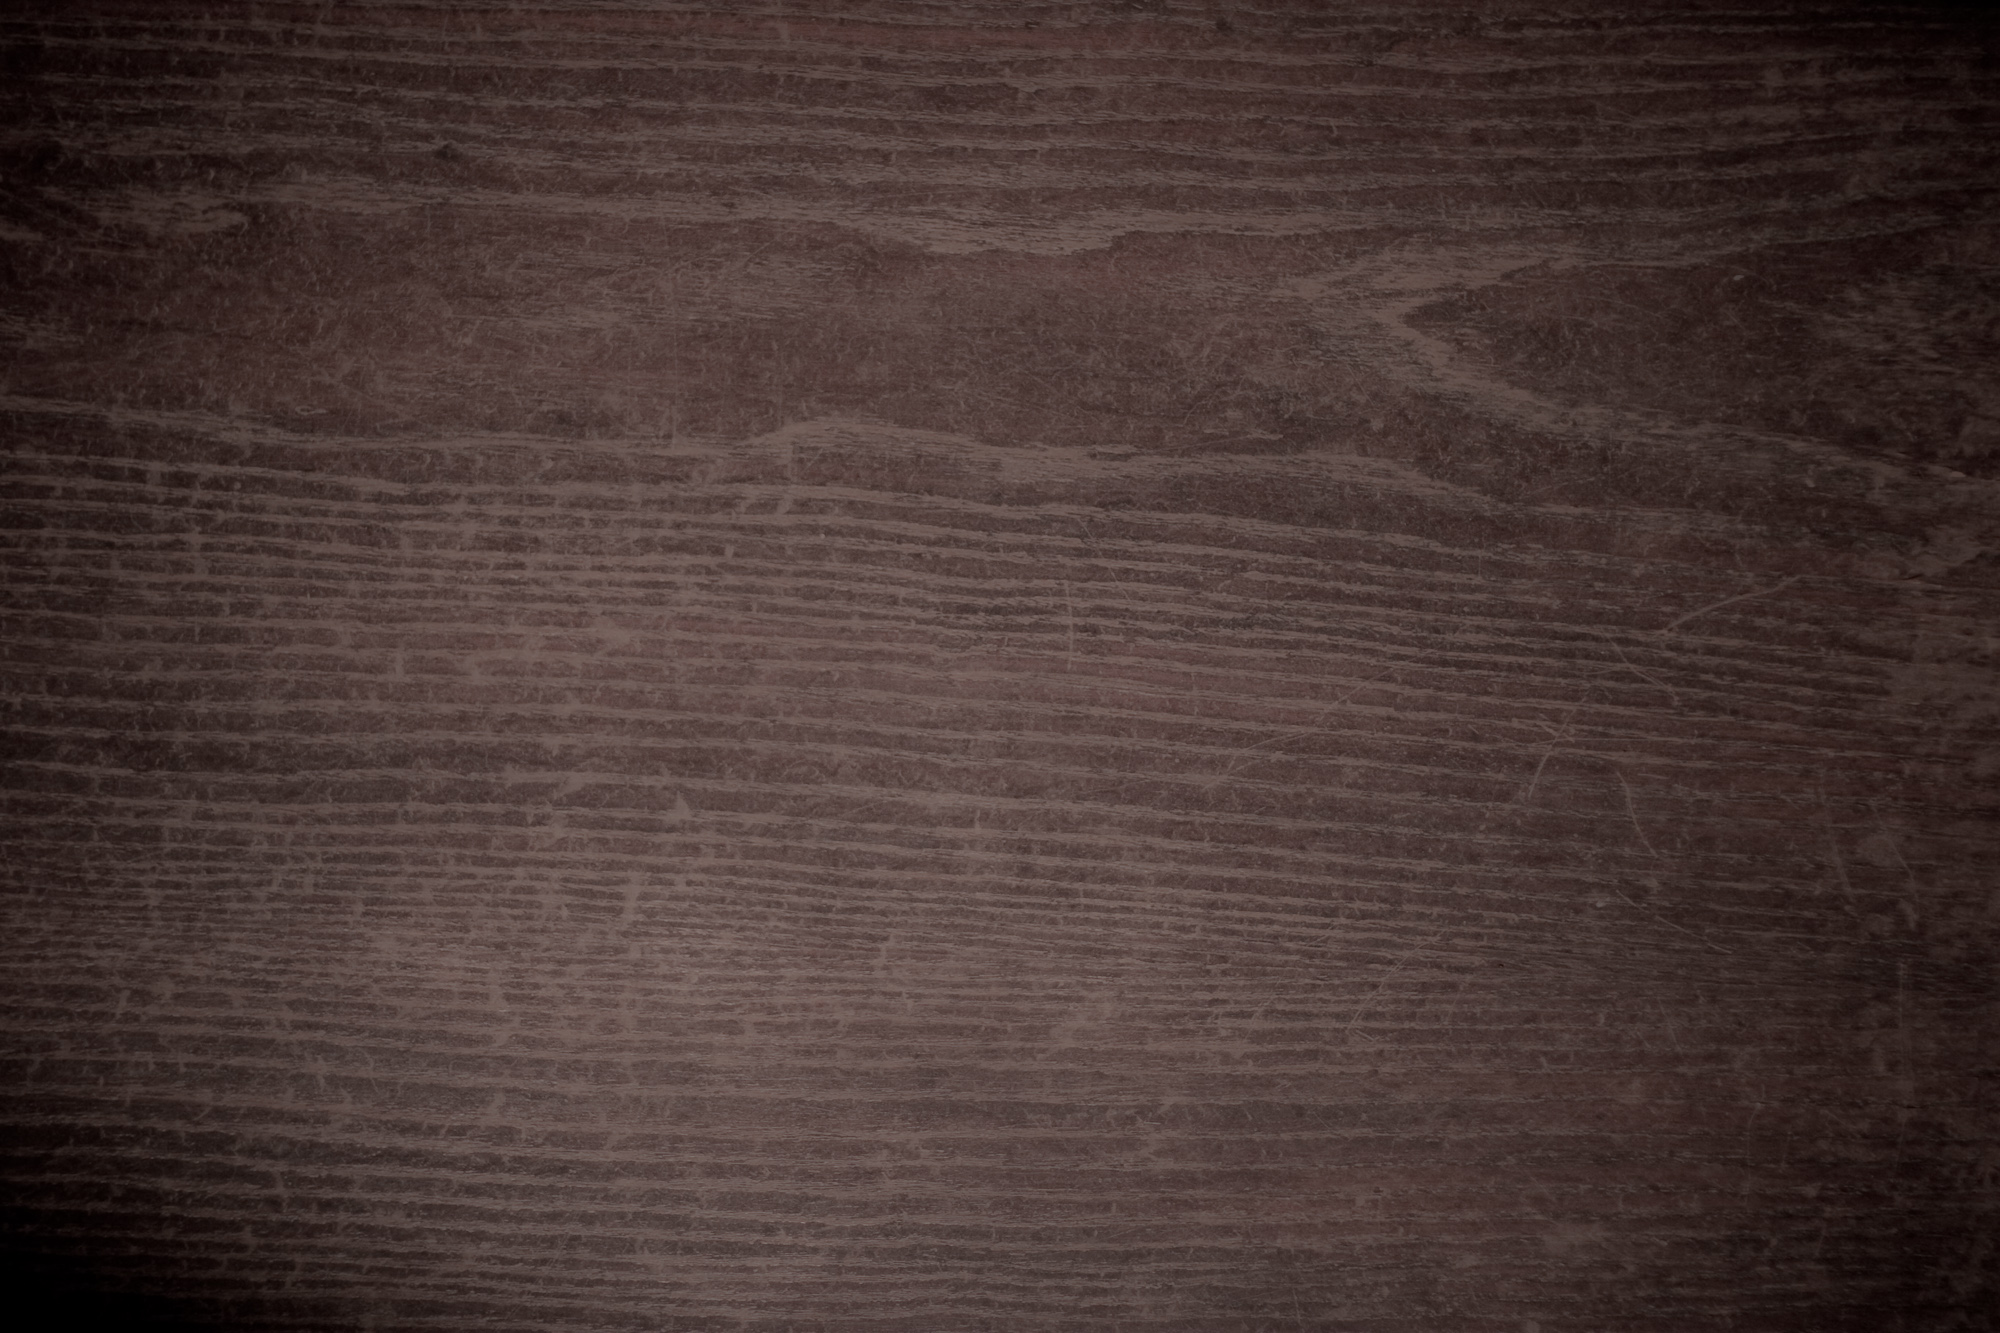 Wood board texture photo